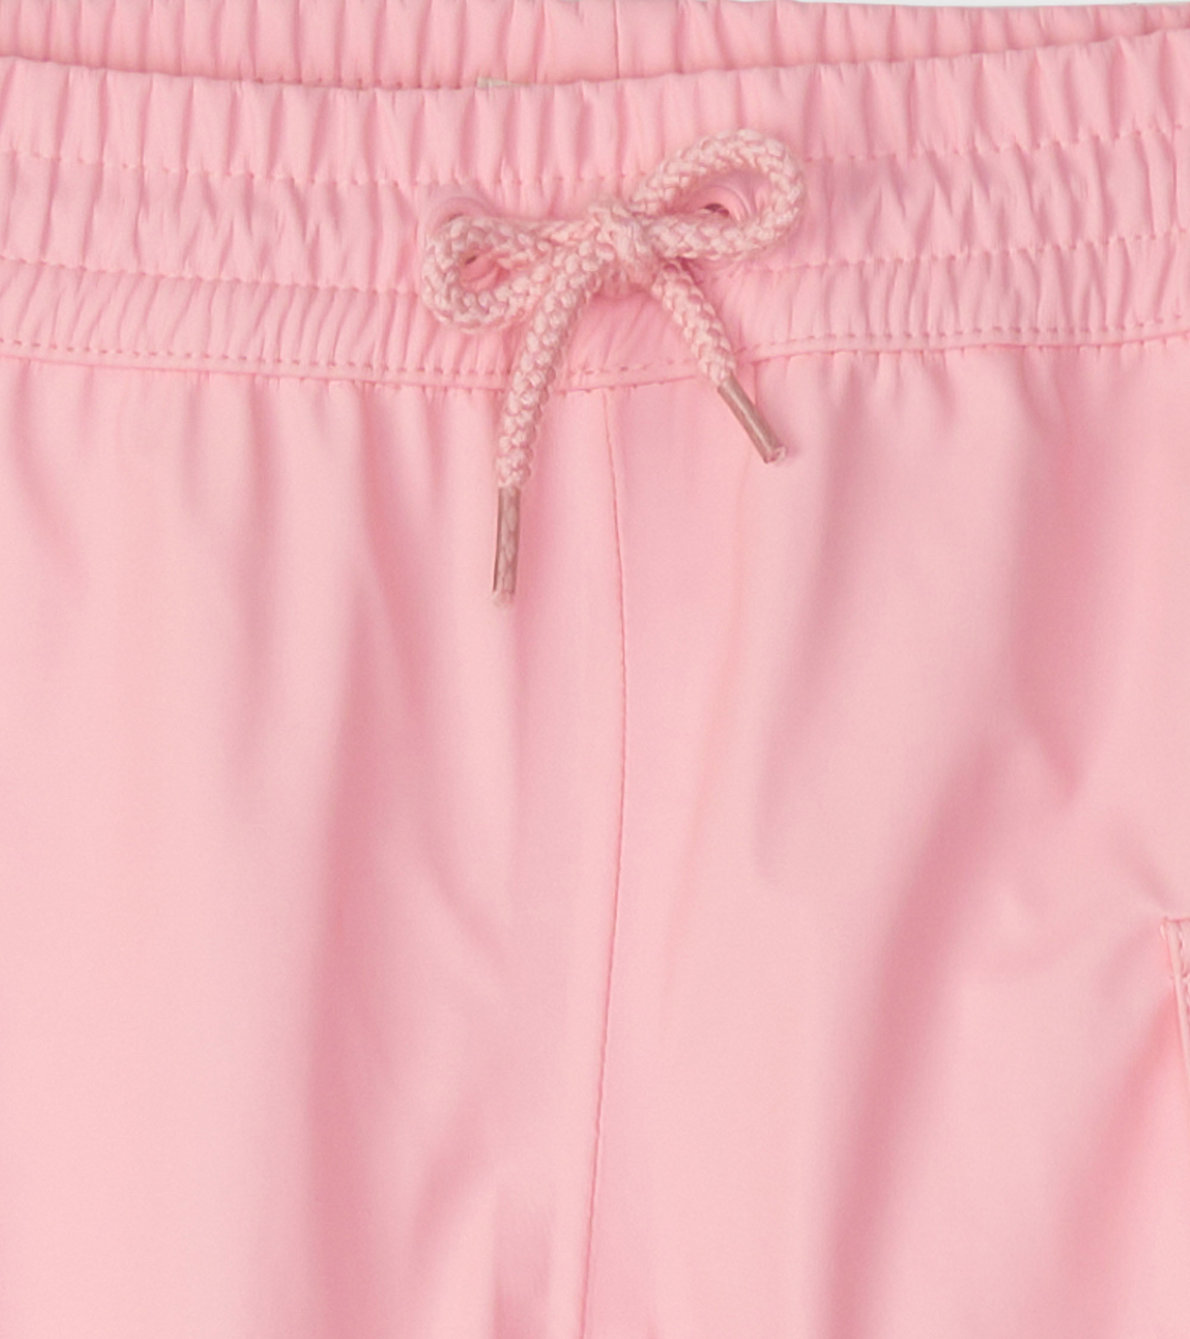 View larger image of Classic Pink Kids Rain Pants